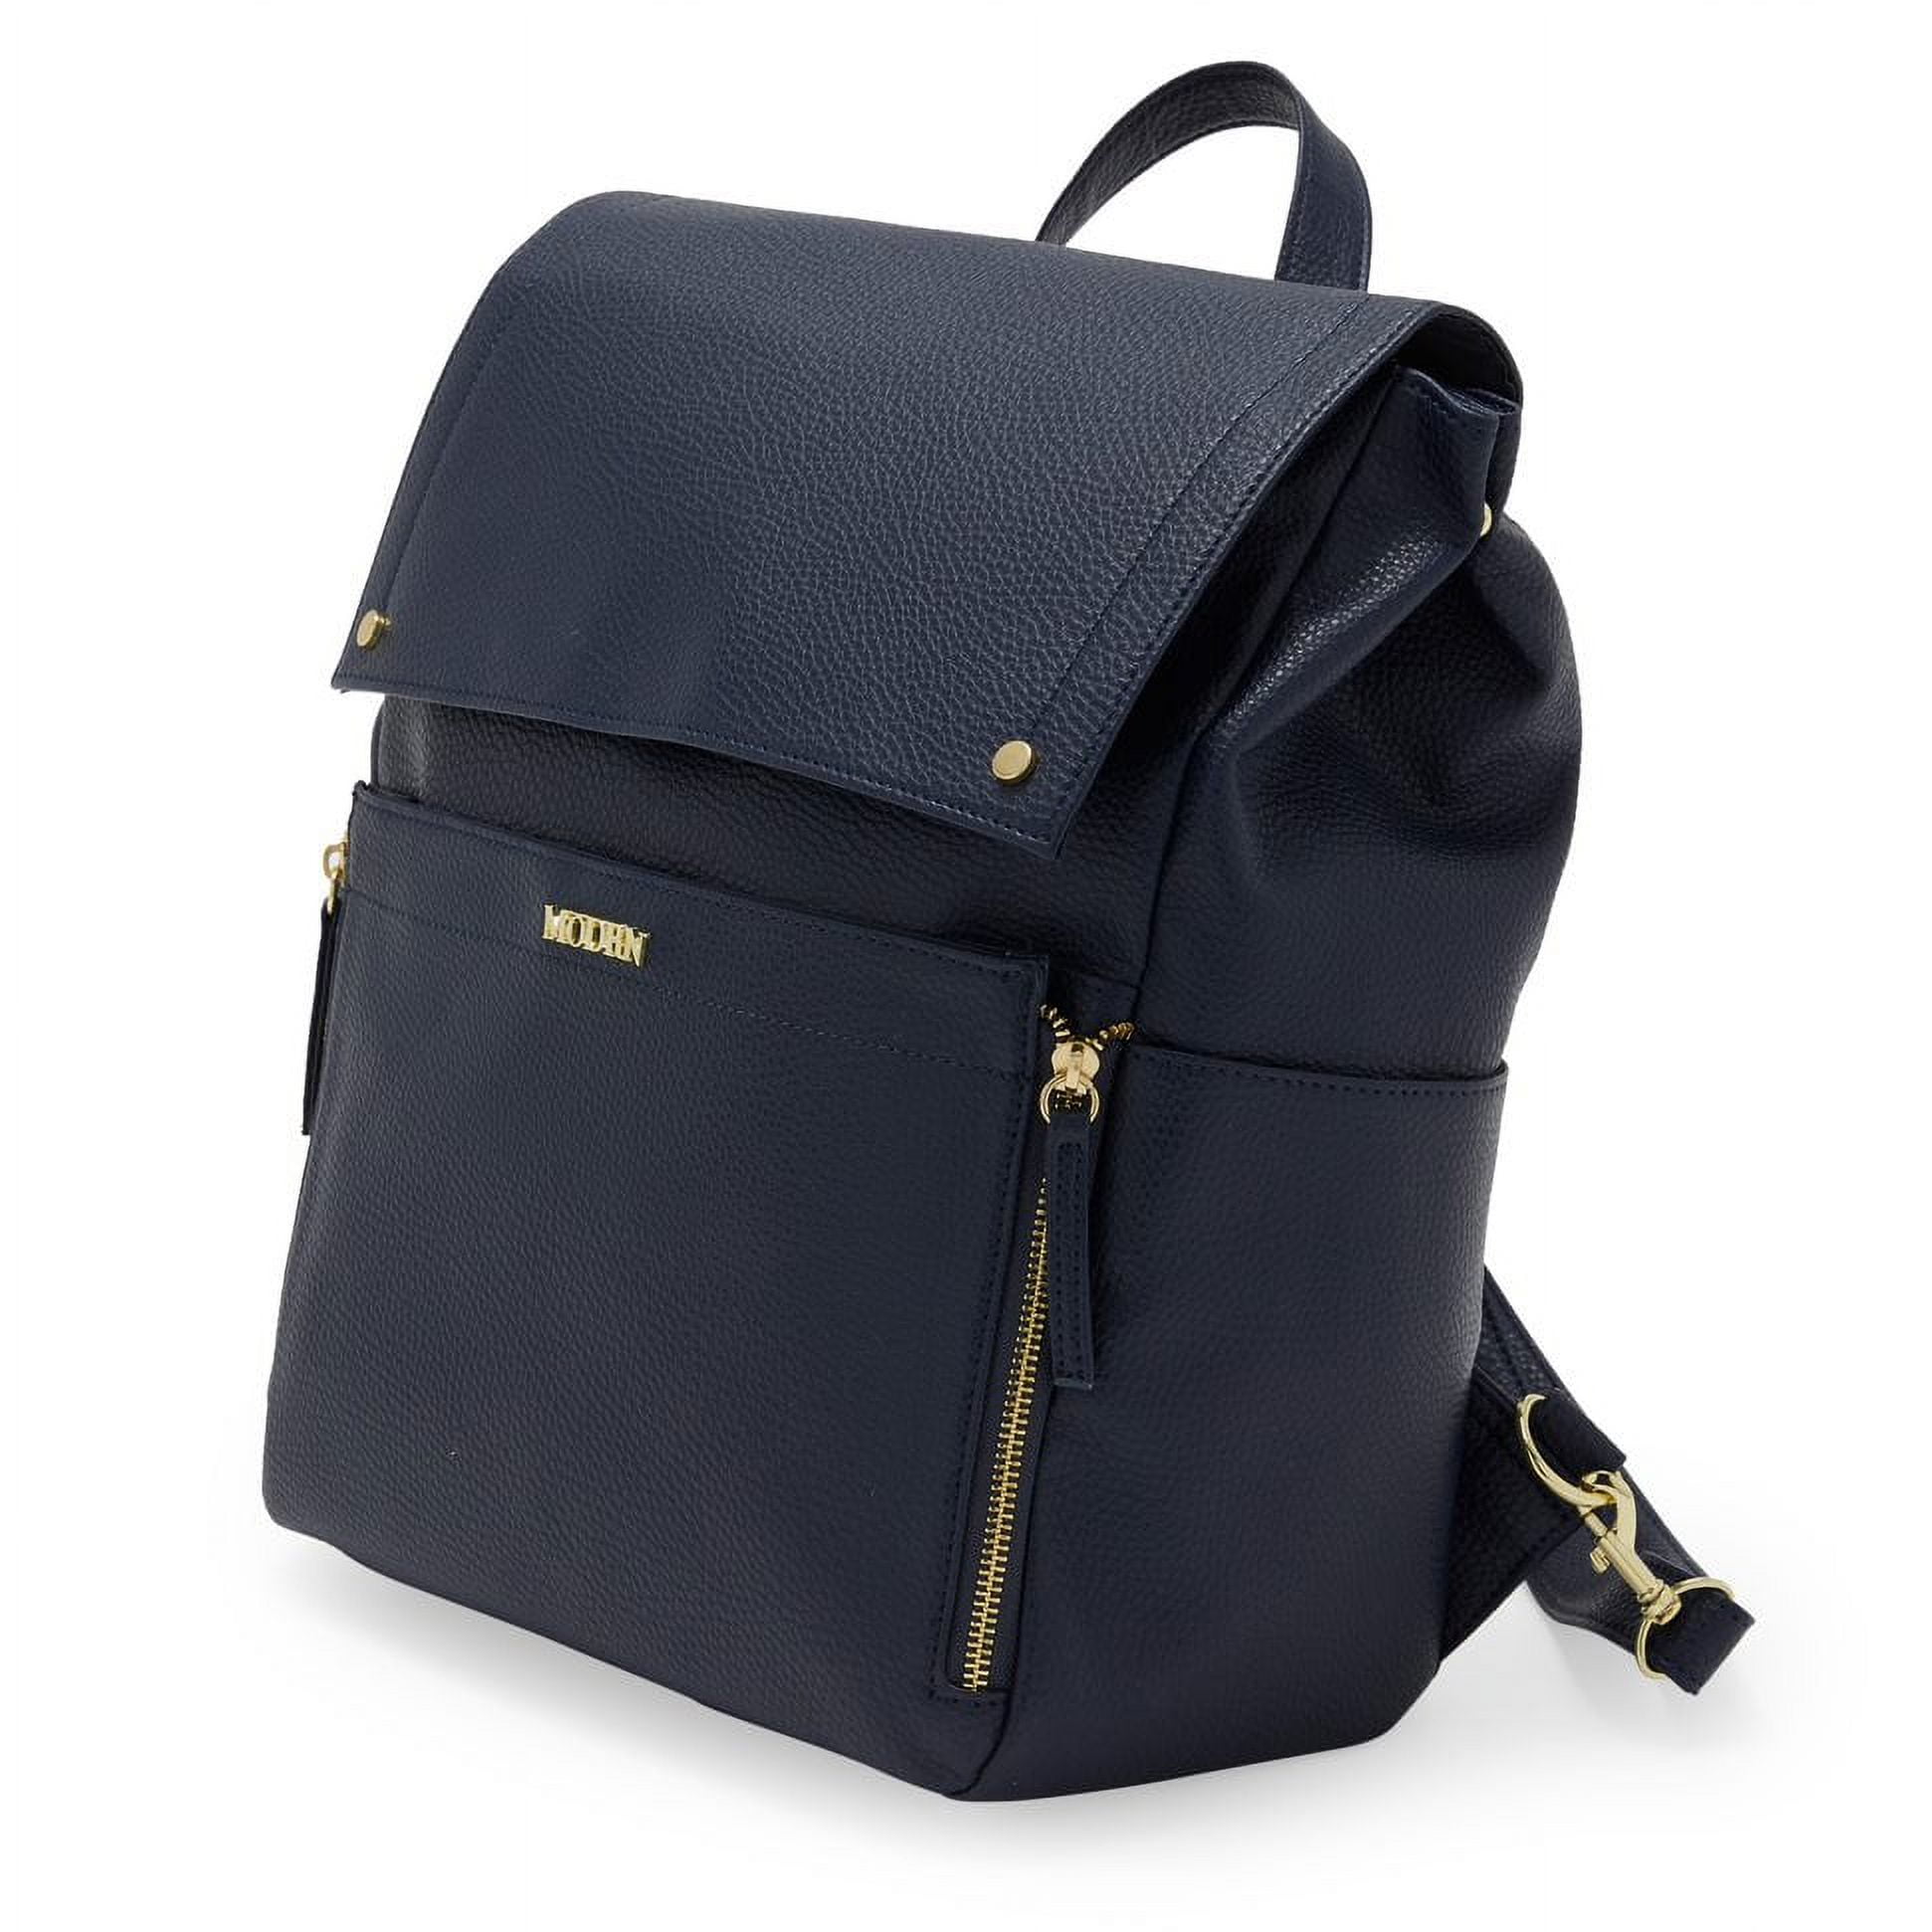 Modrn Nylon Convertible Diaper Bag Backpack, Black